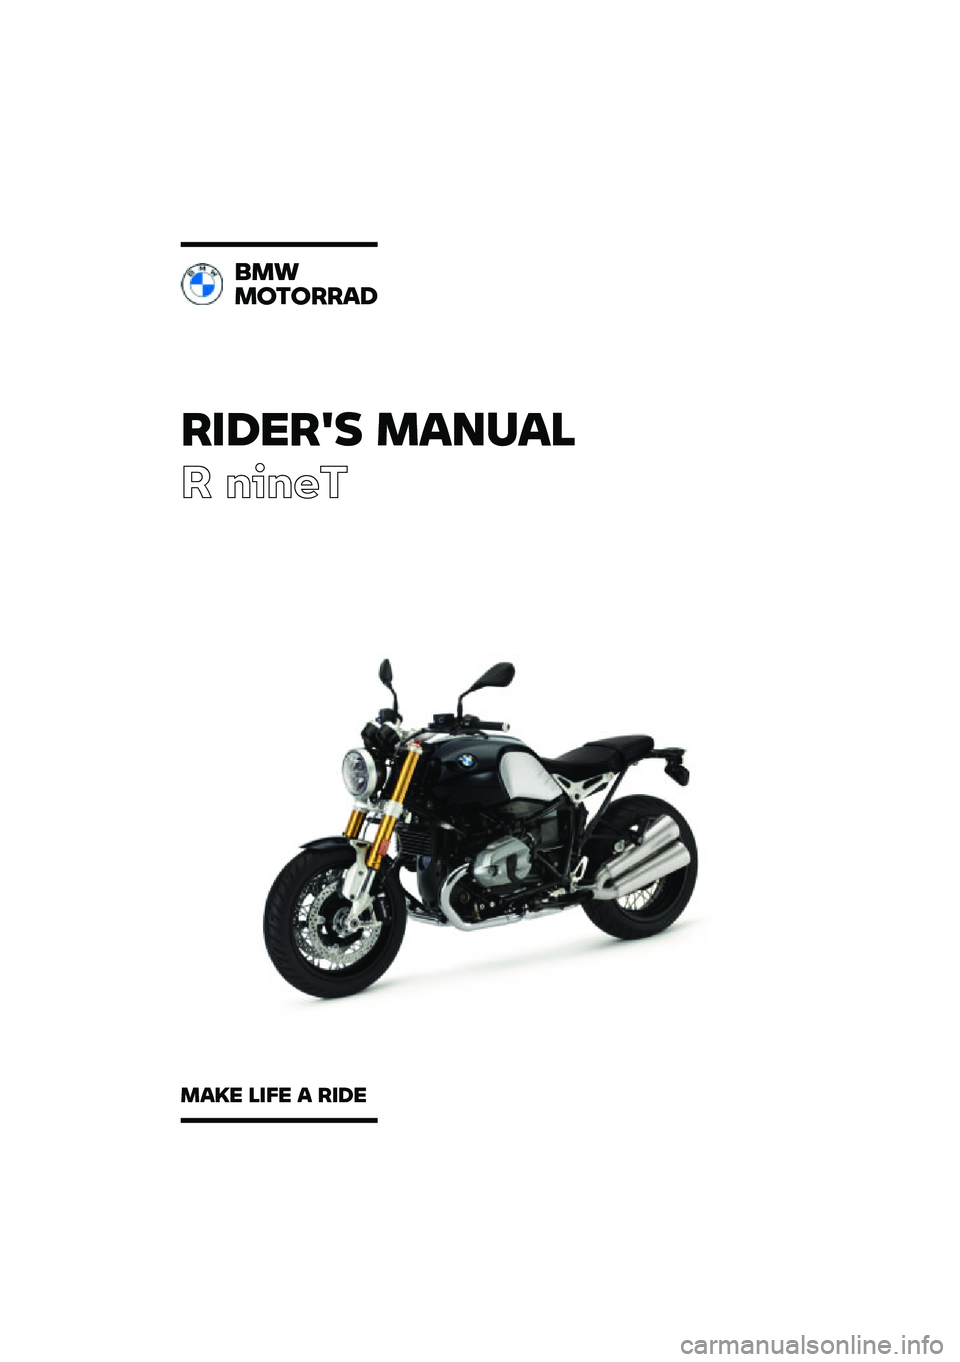 BMW MOTORRAD R NINE T 2021  Riders Manual (in English) ������� �\b�	�
��	�\f
� �����
�
�\b�
�\b������	�
�\b�	�� �\f��� �	 ���� 